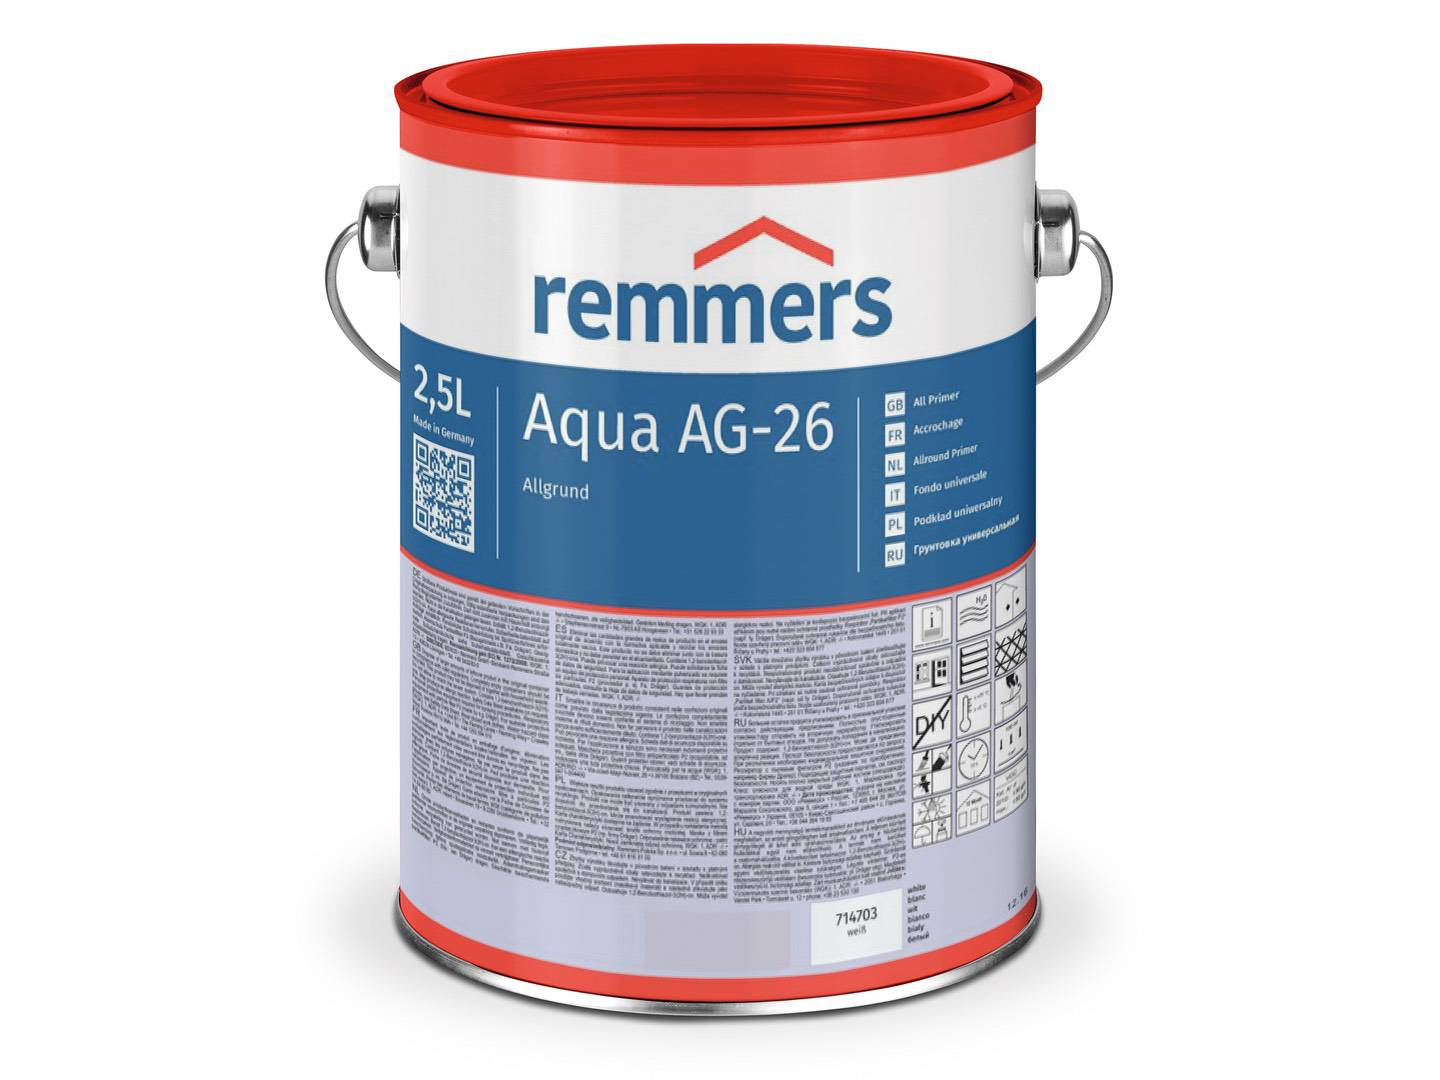 REMMERS Aqua AG-26-Allgrund grau 2,50 l